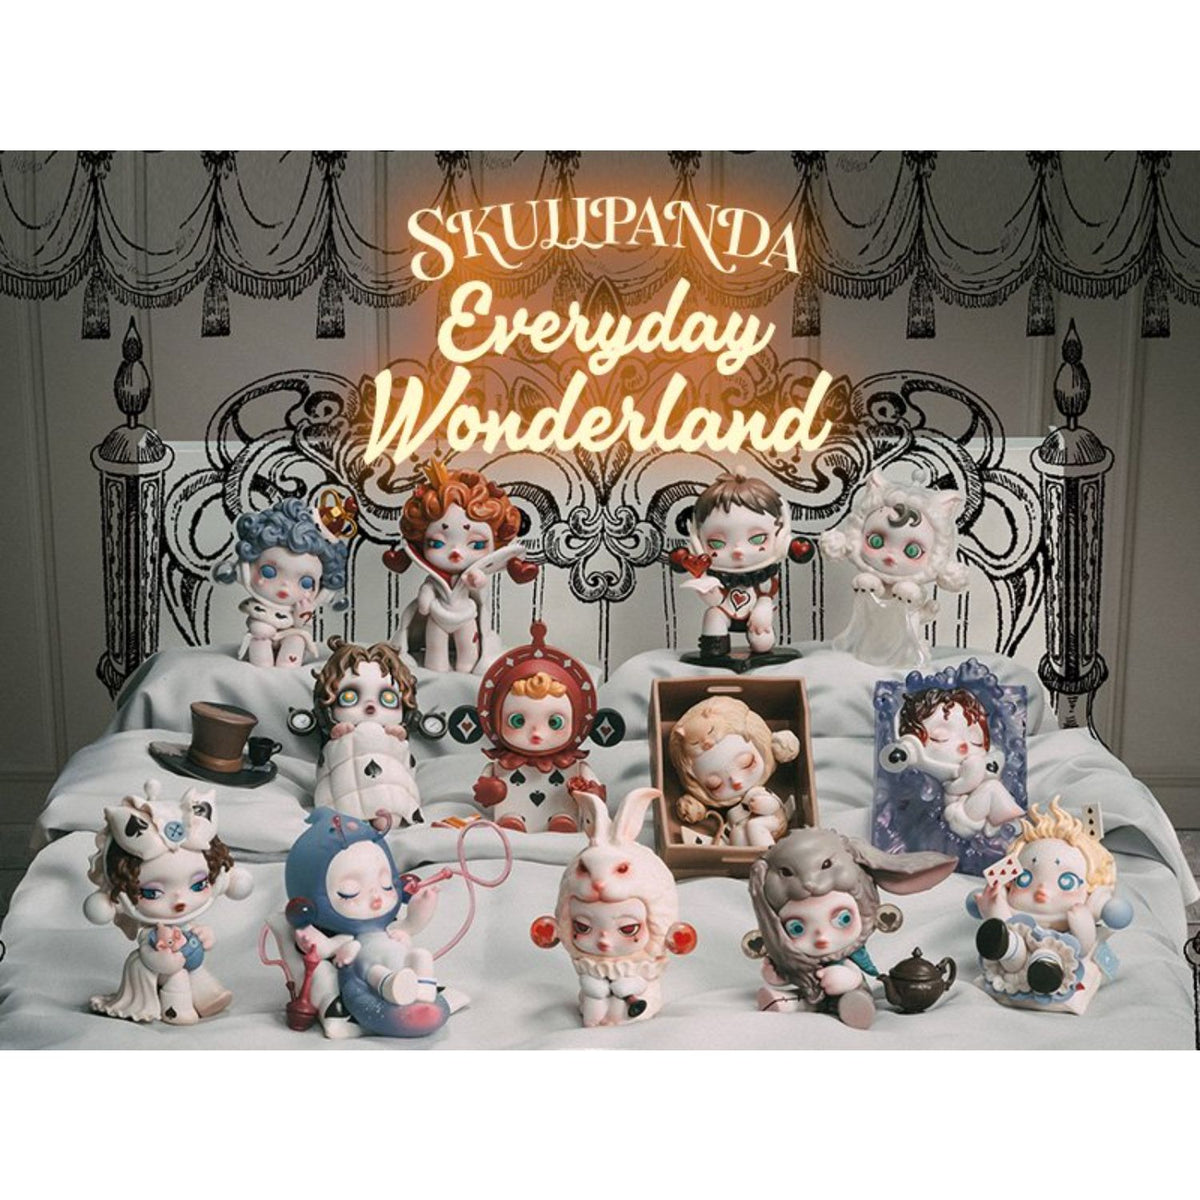 SKULLPANDA Everyday Wonderland セット整理のため出品いたします